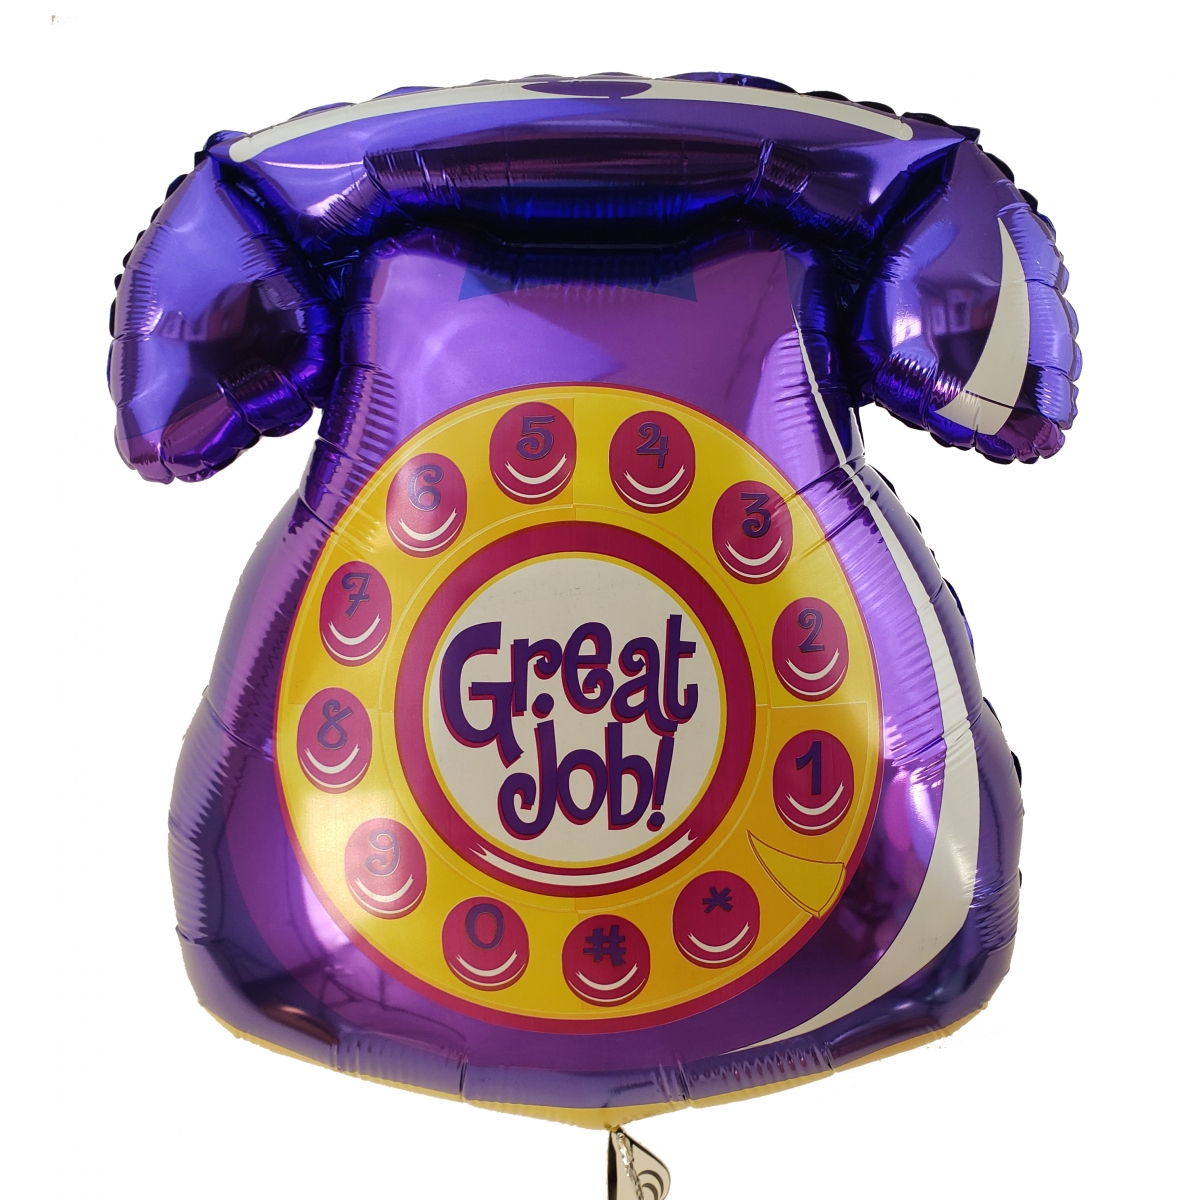 Shape - Phone - 33" - Great Job! balloon